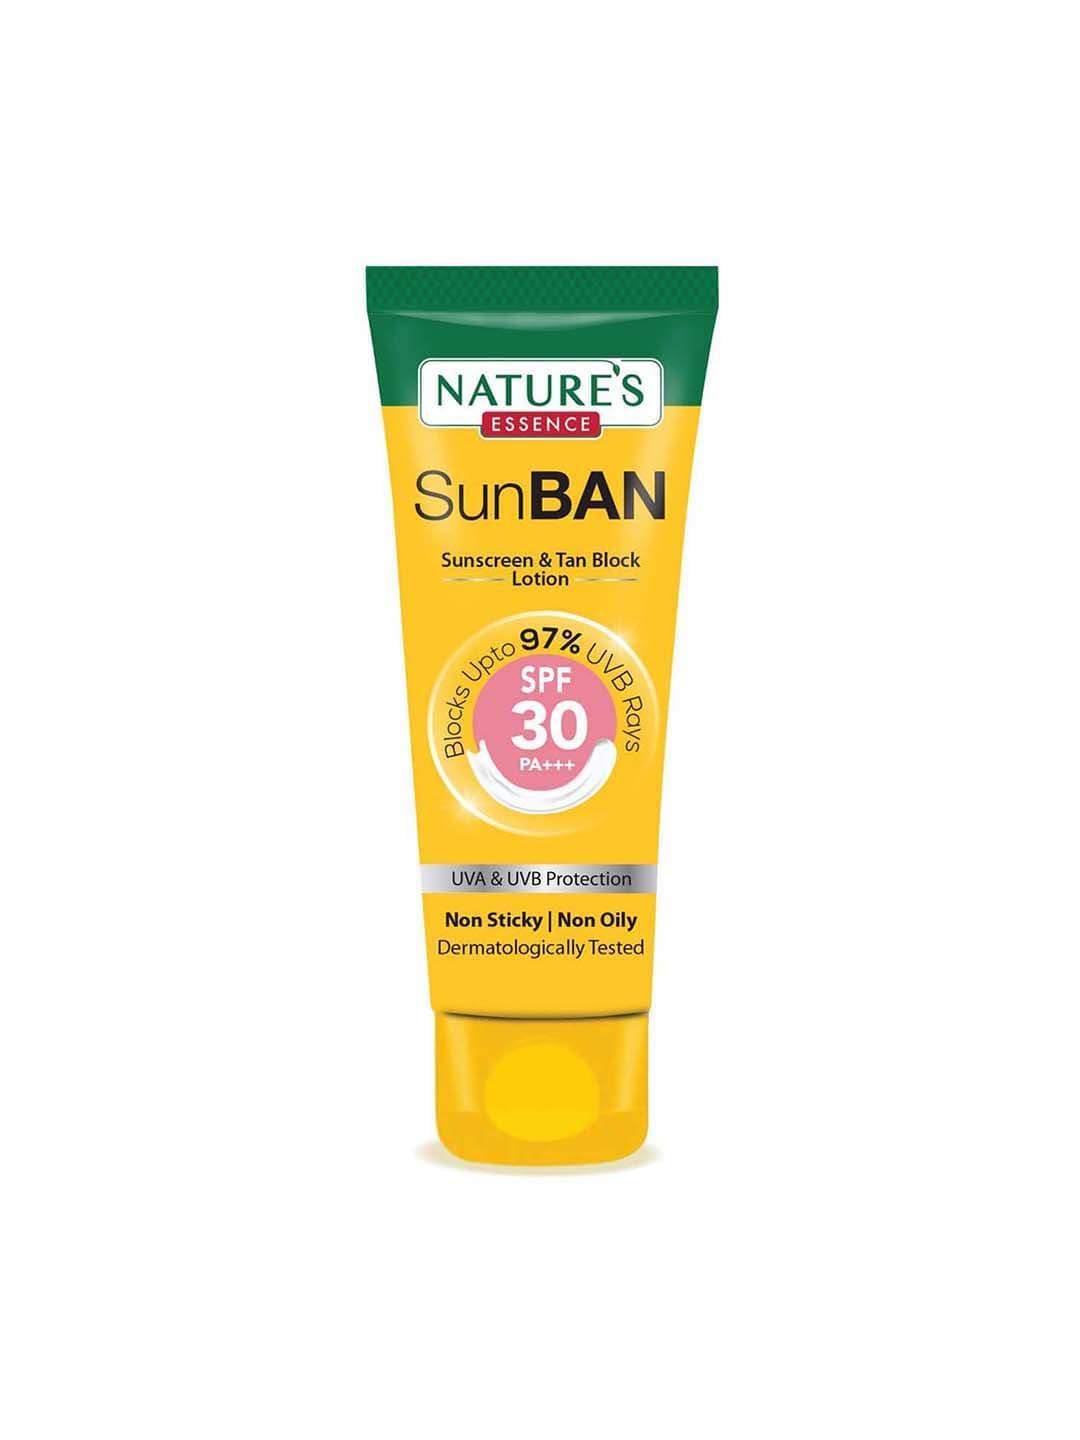 Natures Essence SunBan SPF30 PA+++ Sunscreen & Tan Block Lotion with Aloe Vera - 60ml